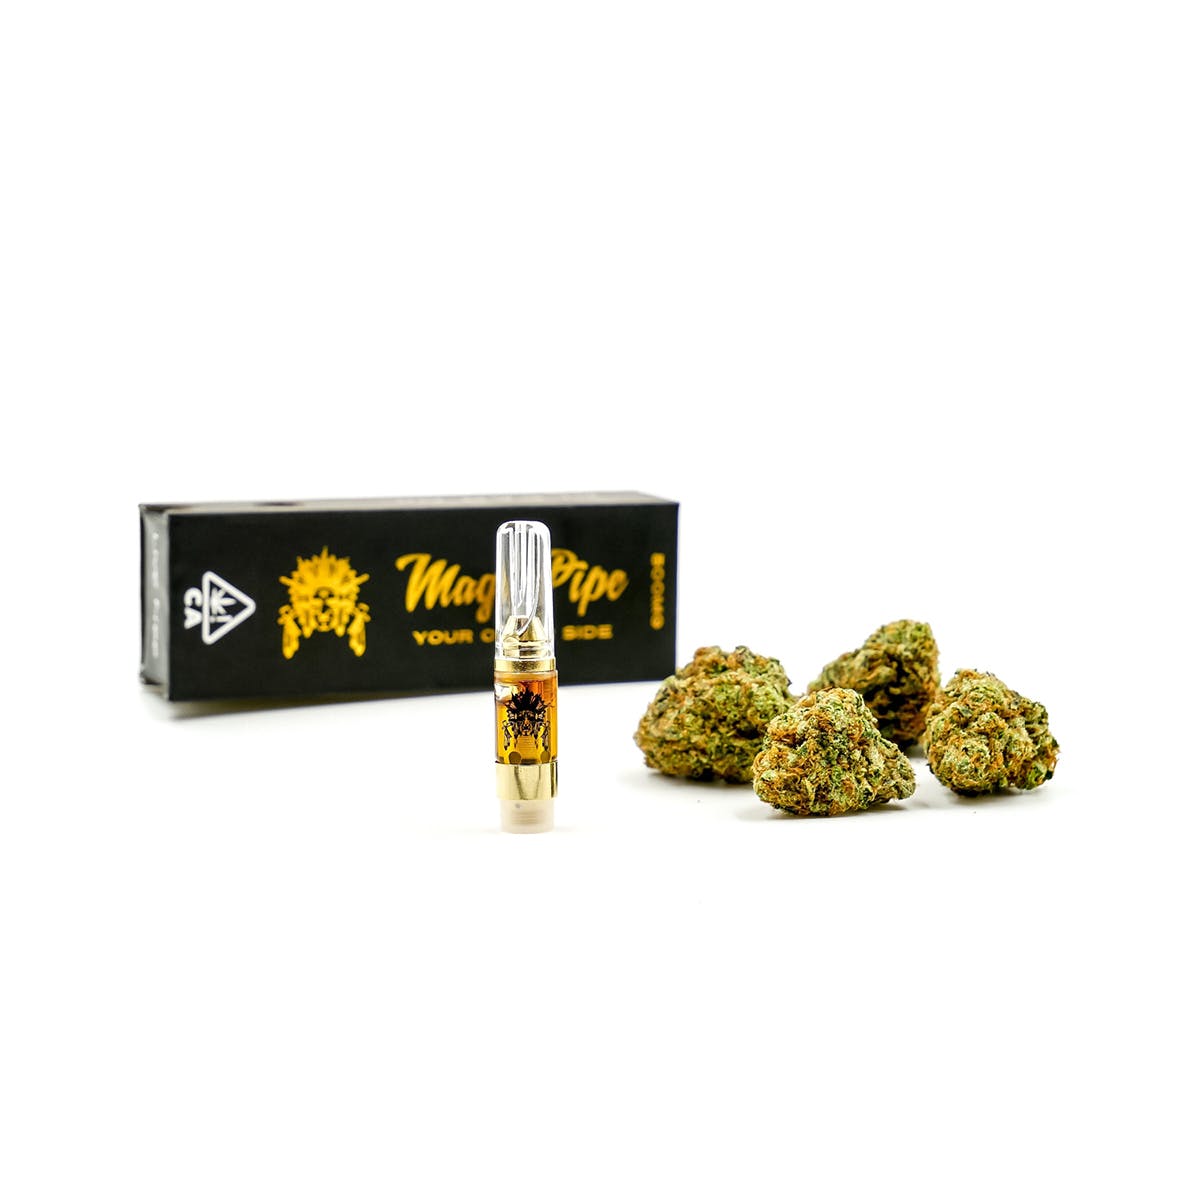 marijuana-dispensaries-kos-la-in-los-angeles-diablo-og-premium-cartridge